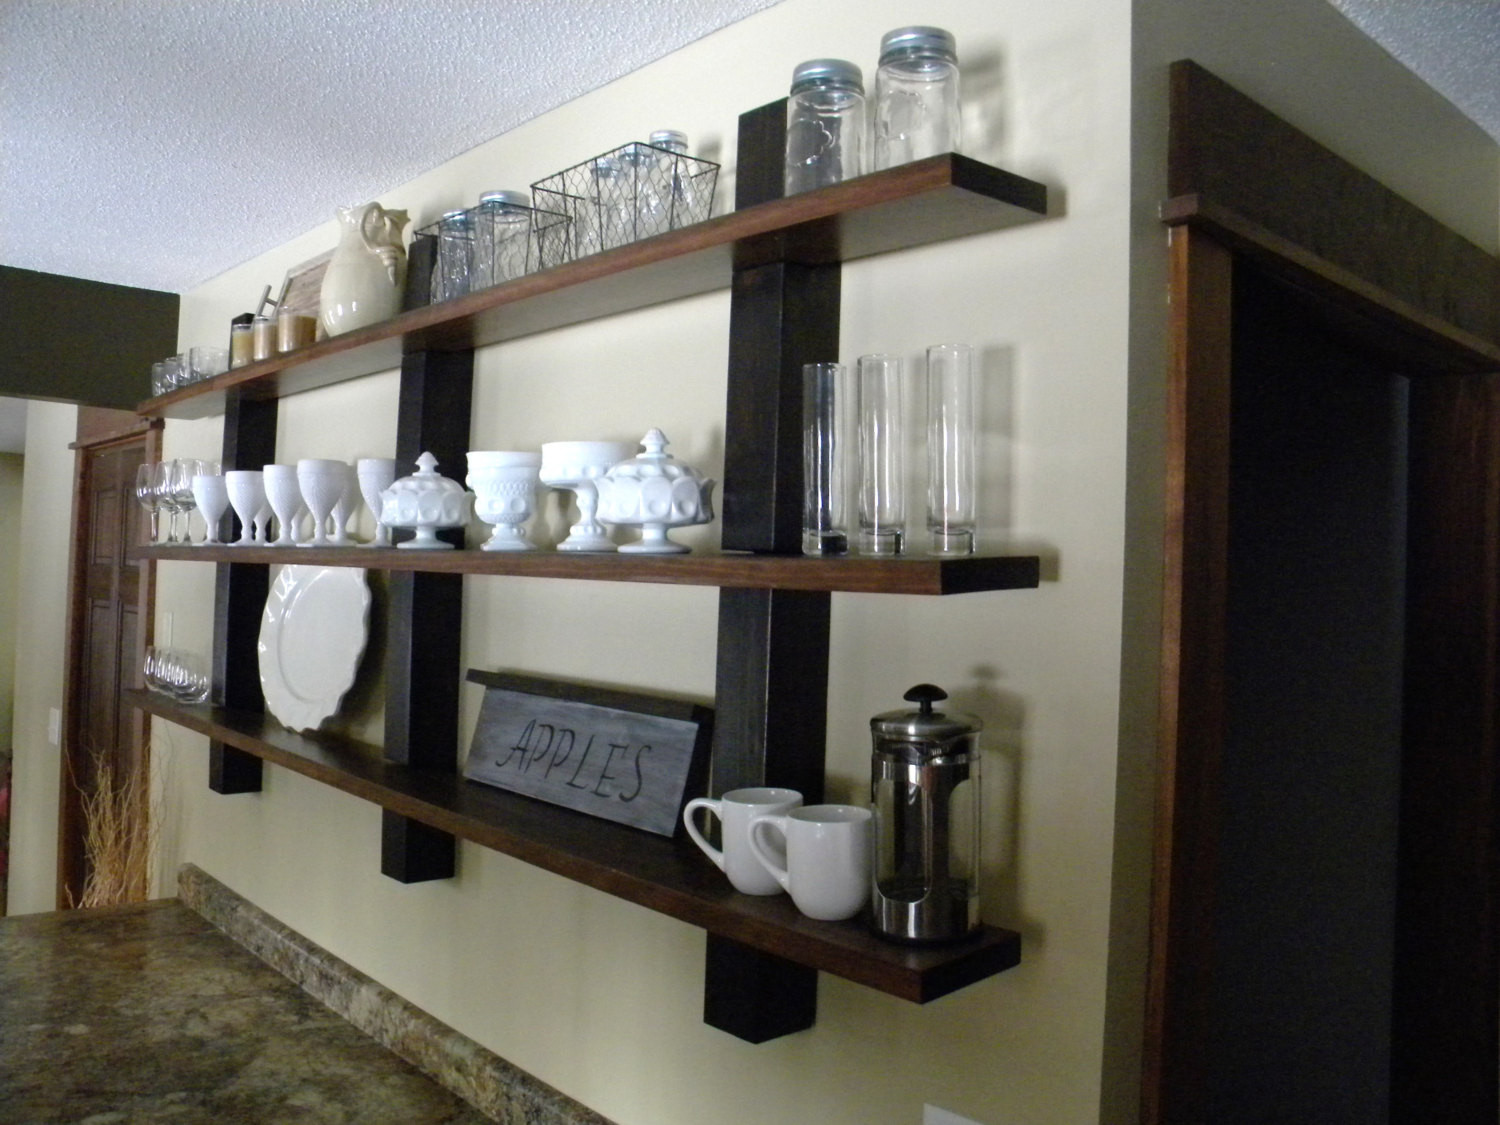 Decorative Kitchen Wall Shelves
 Open Shelving Decorative Shelves Wall Decor by